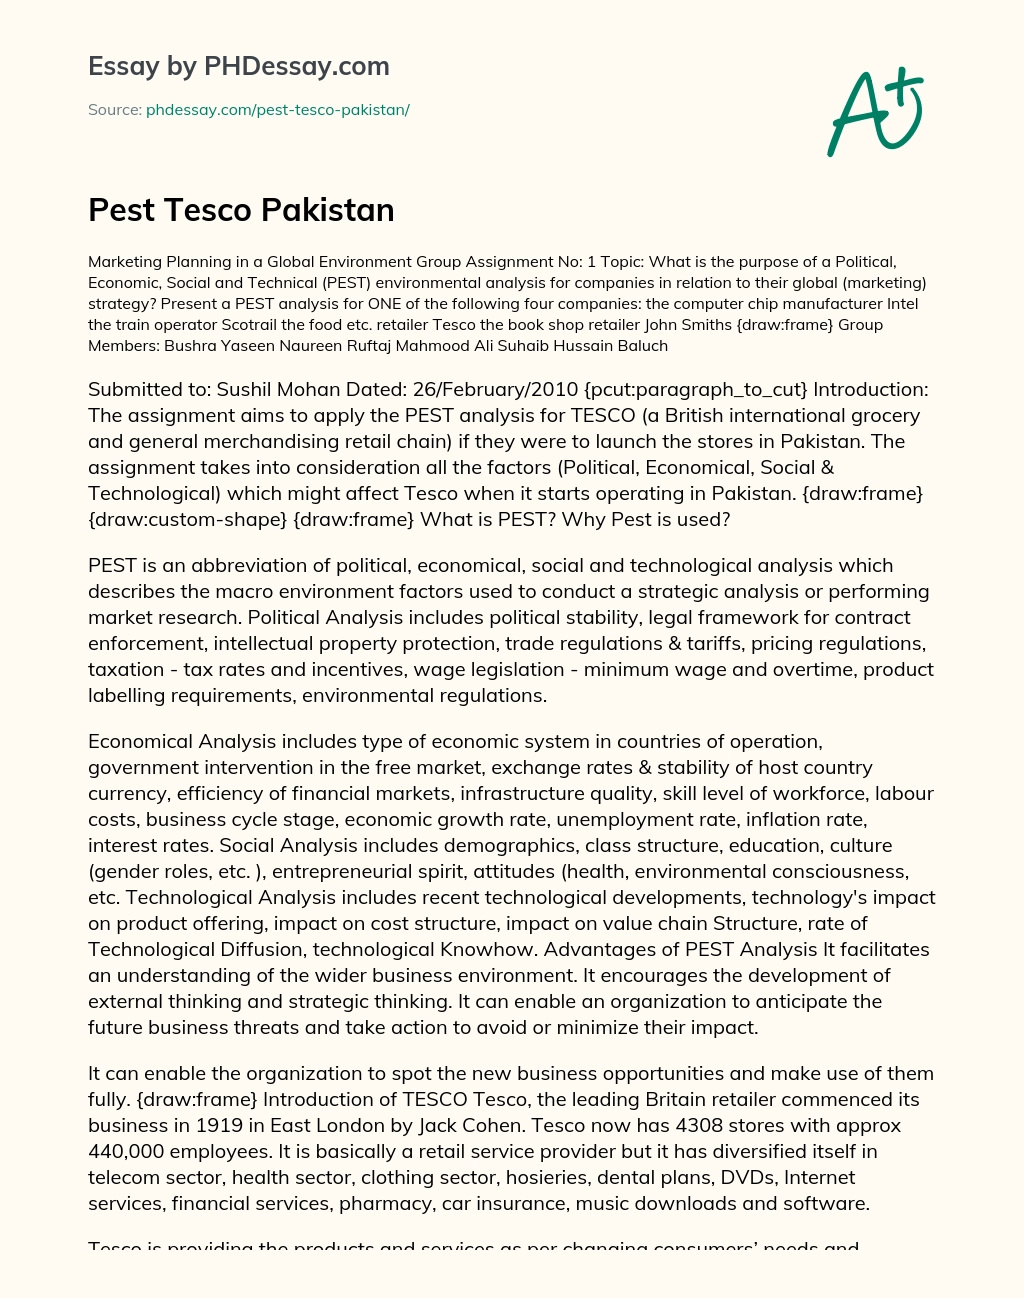 Pest Tesco Pakistan essay